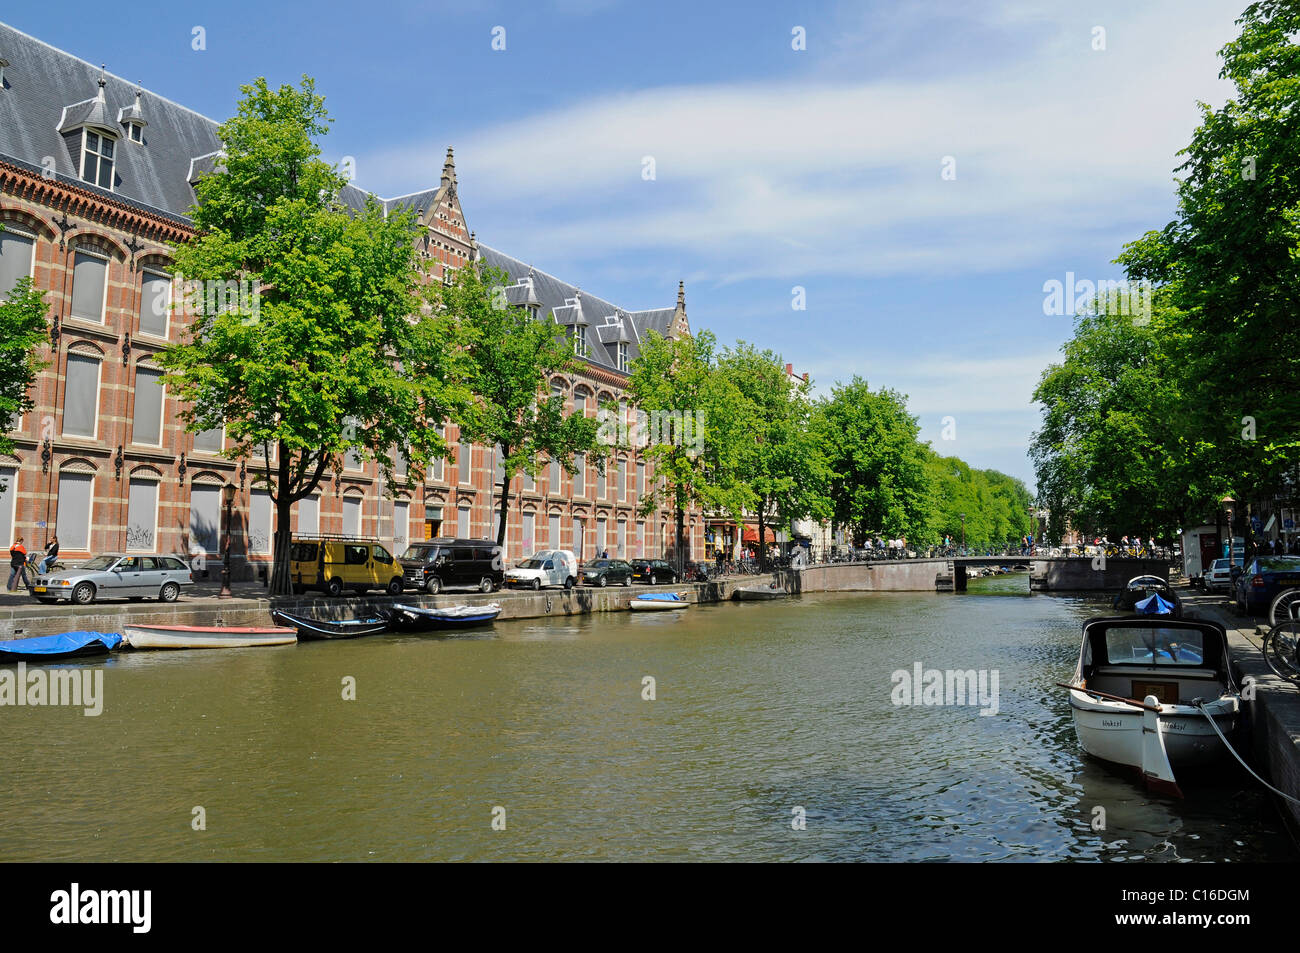 Oost Indish Huis, istituto, università, canal, barca, Amsterdam, Olanda, Paesi Bassi, Europa Foto Stock